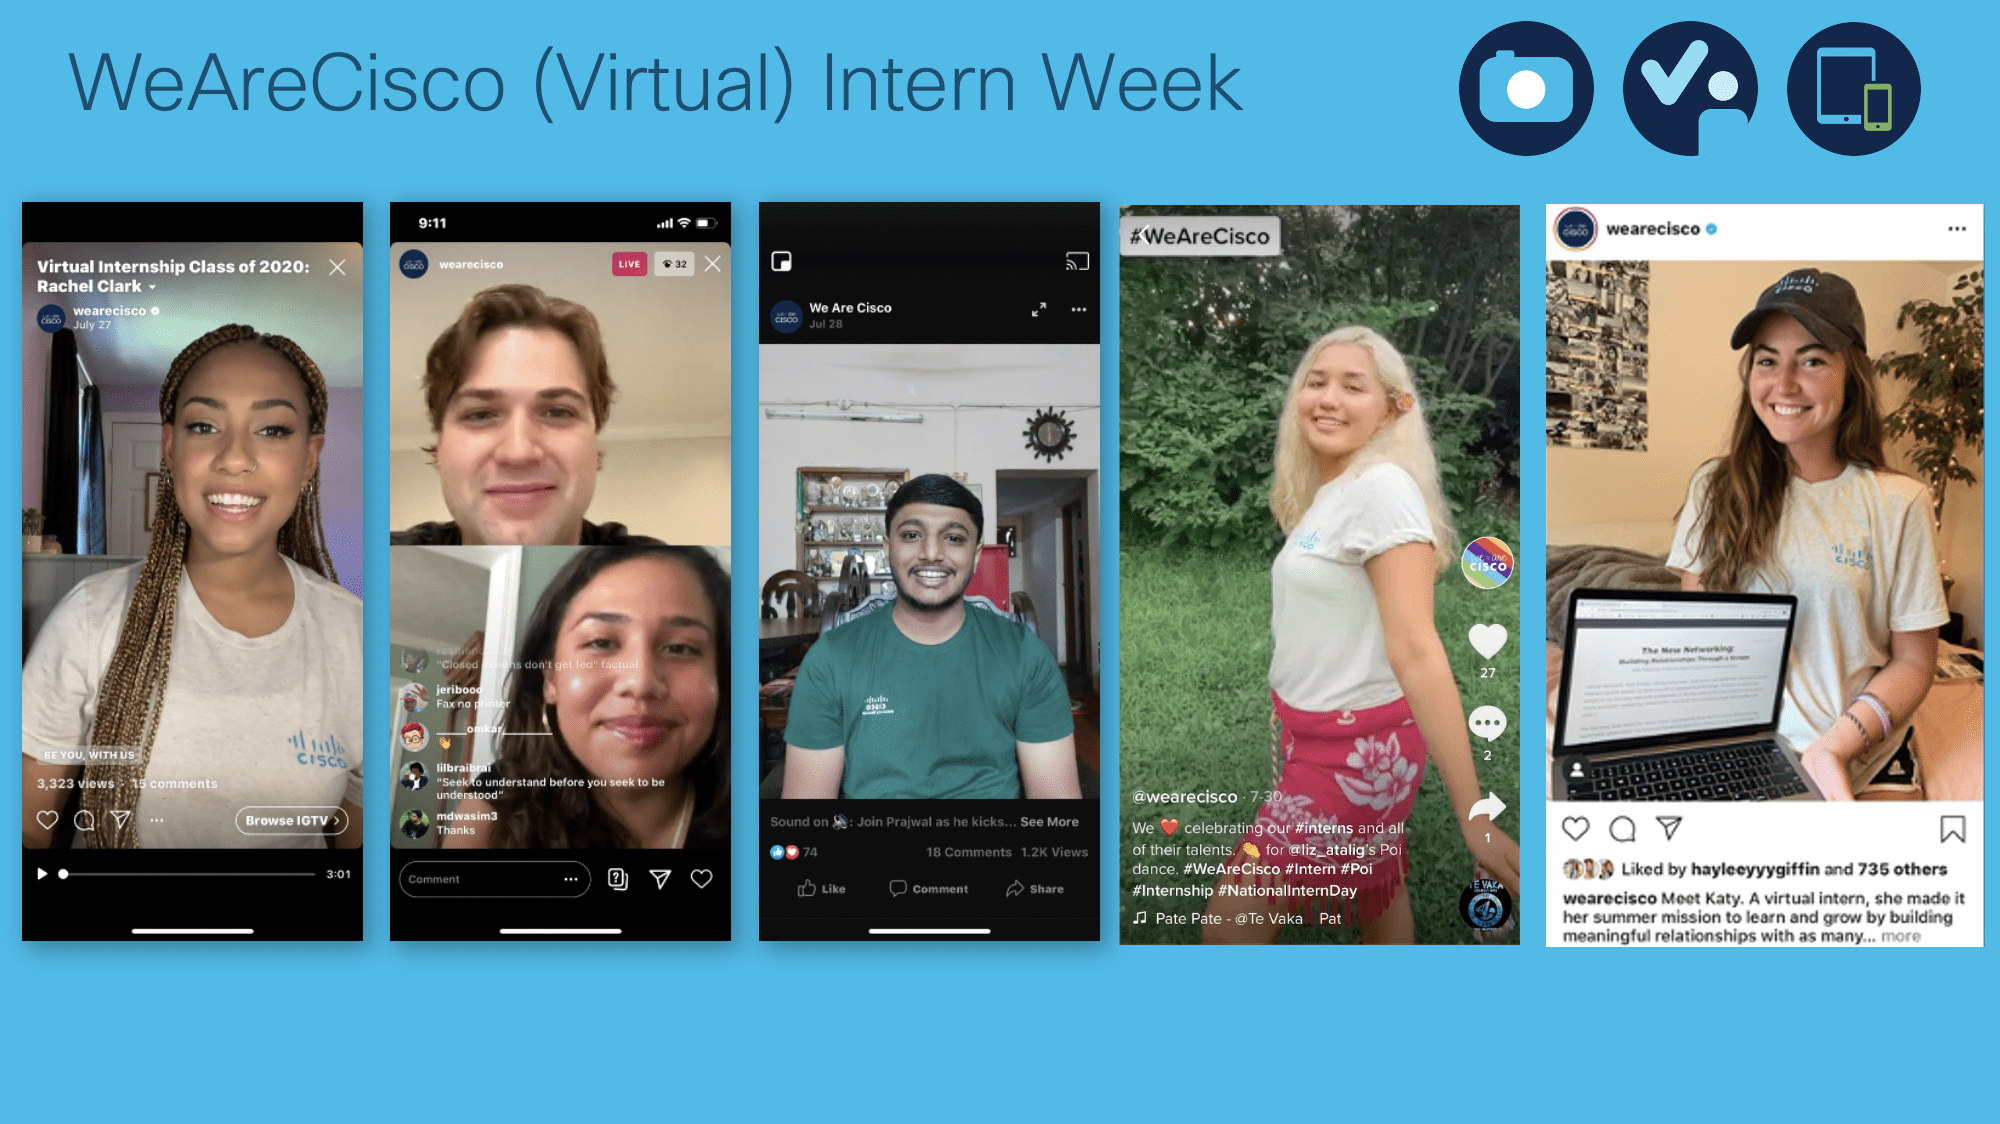 WeAreCisco (Virtual) Intern Week 2020 Campaign